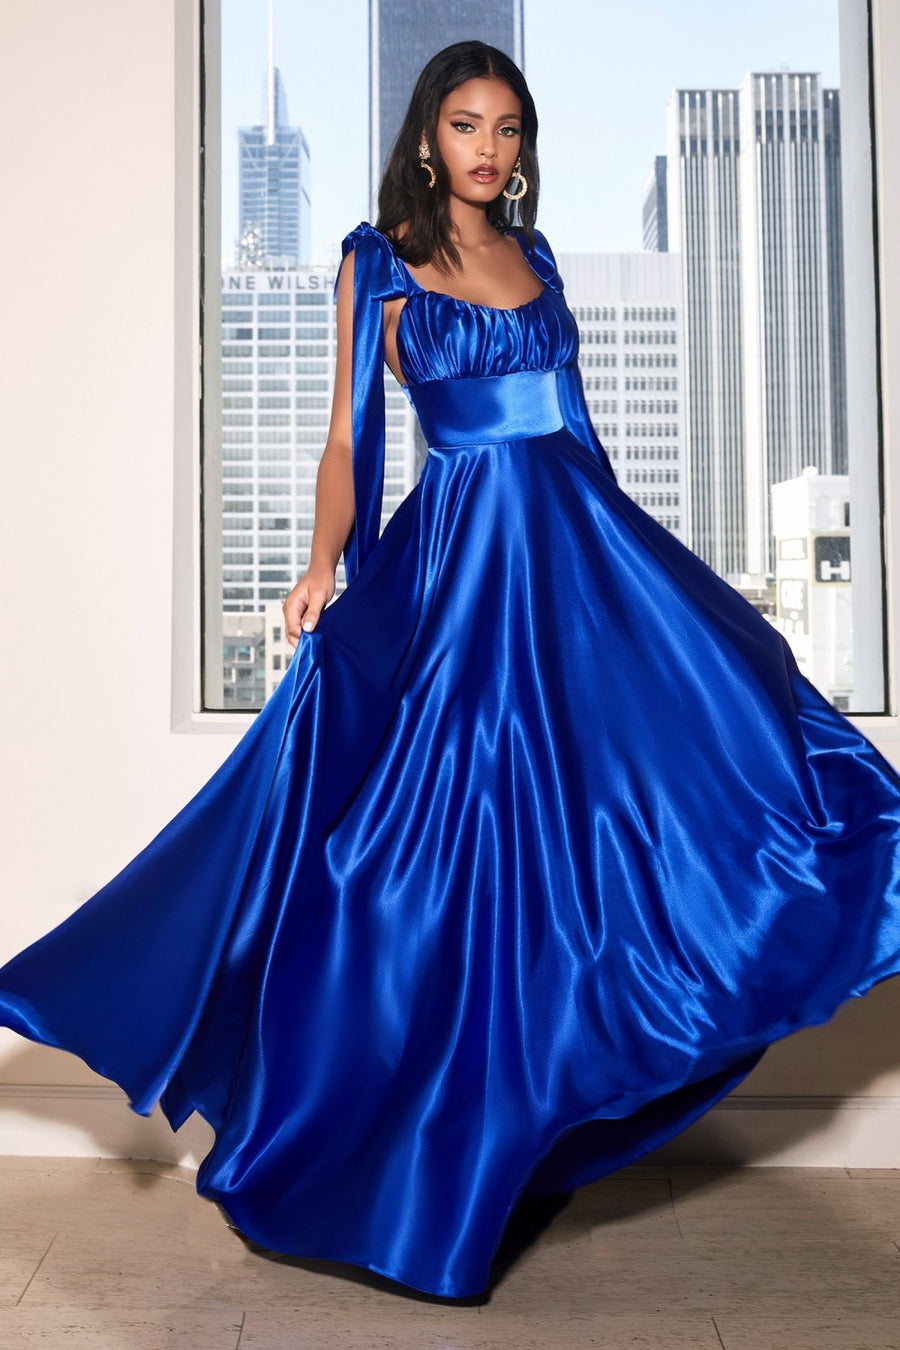 Reception and party wear satin gown in dark blue  G3WGO2281   G3fashioncom